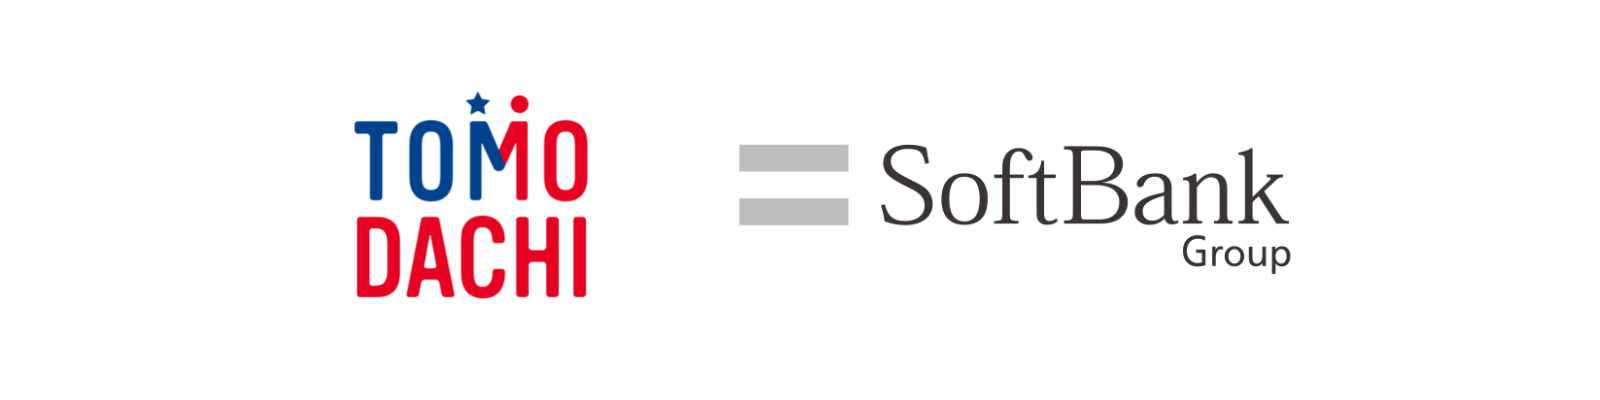 TOMODACHI SoftBank logos